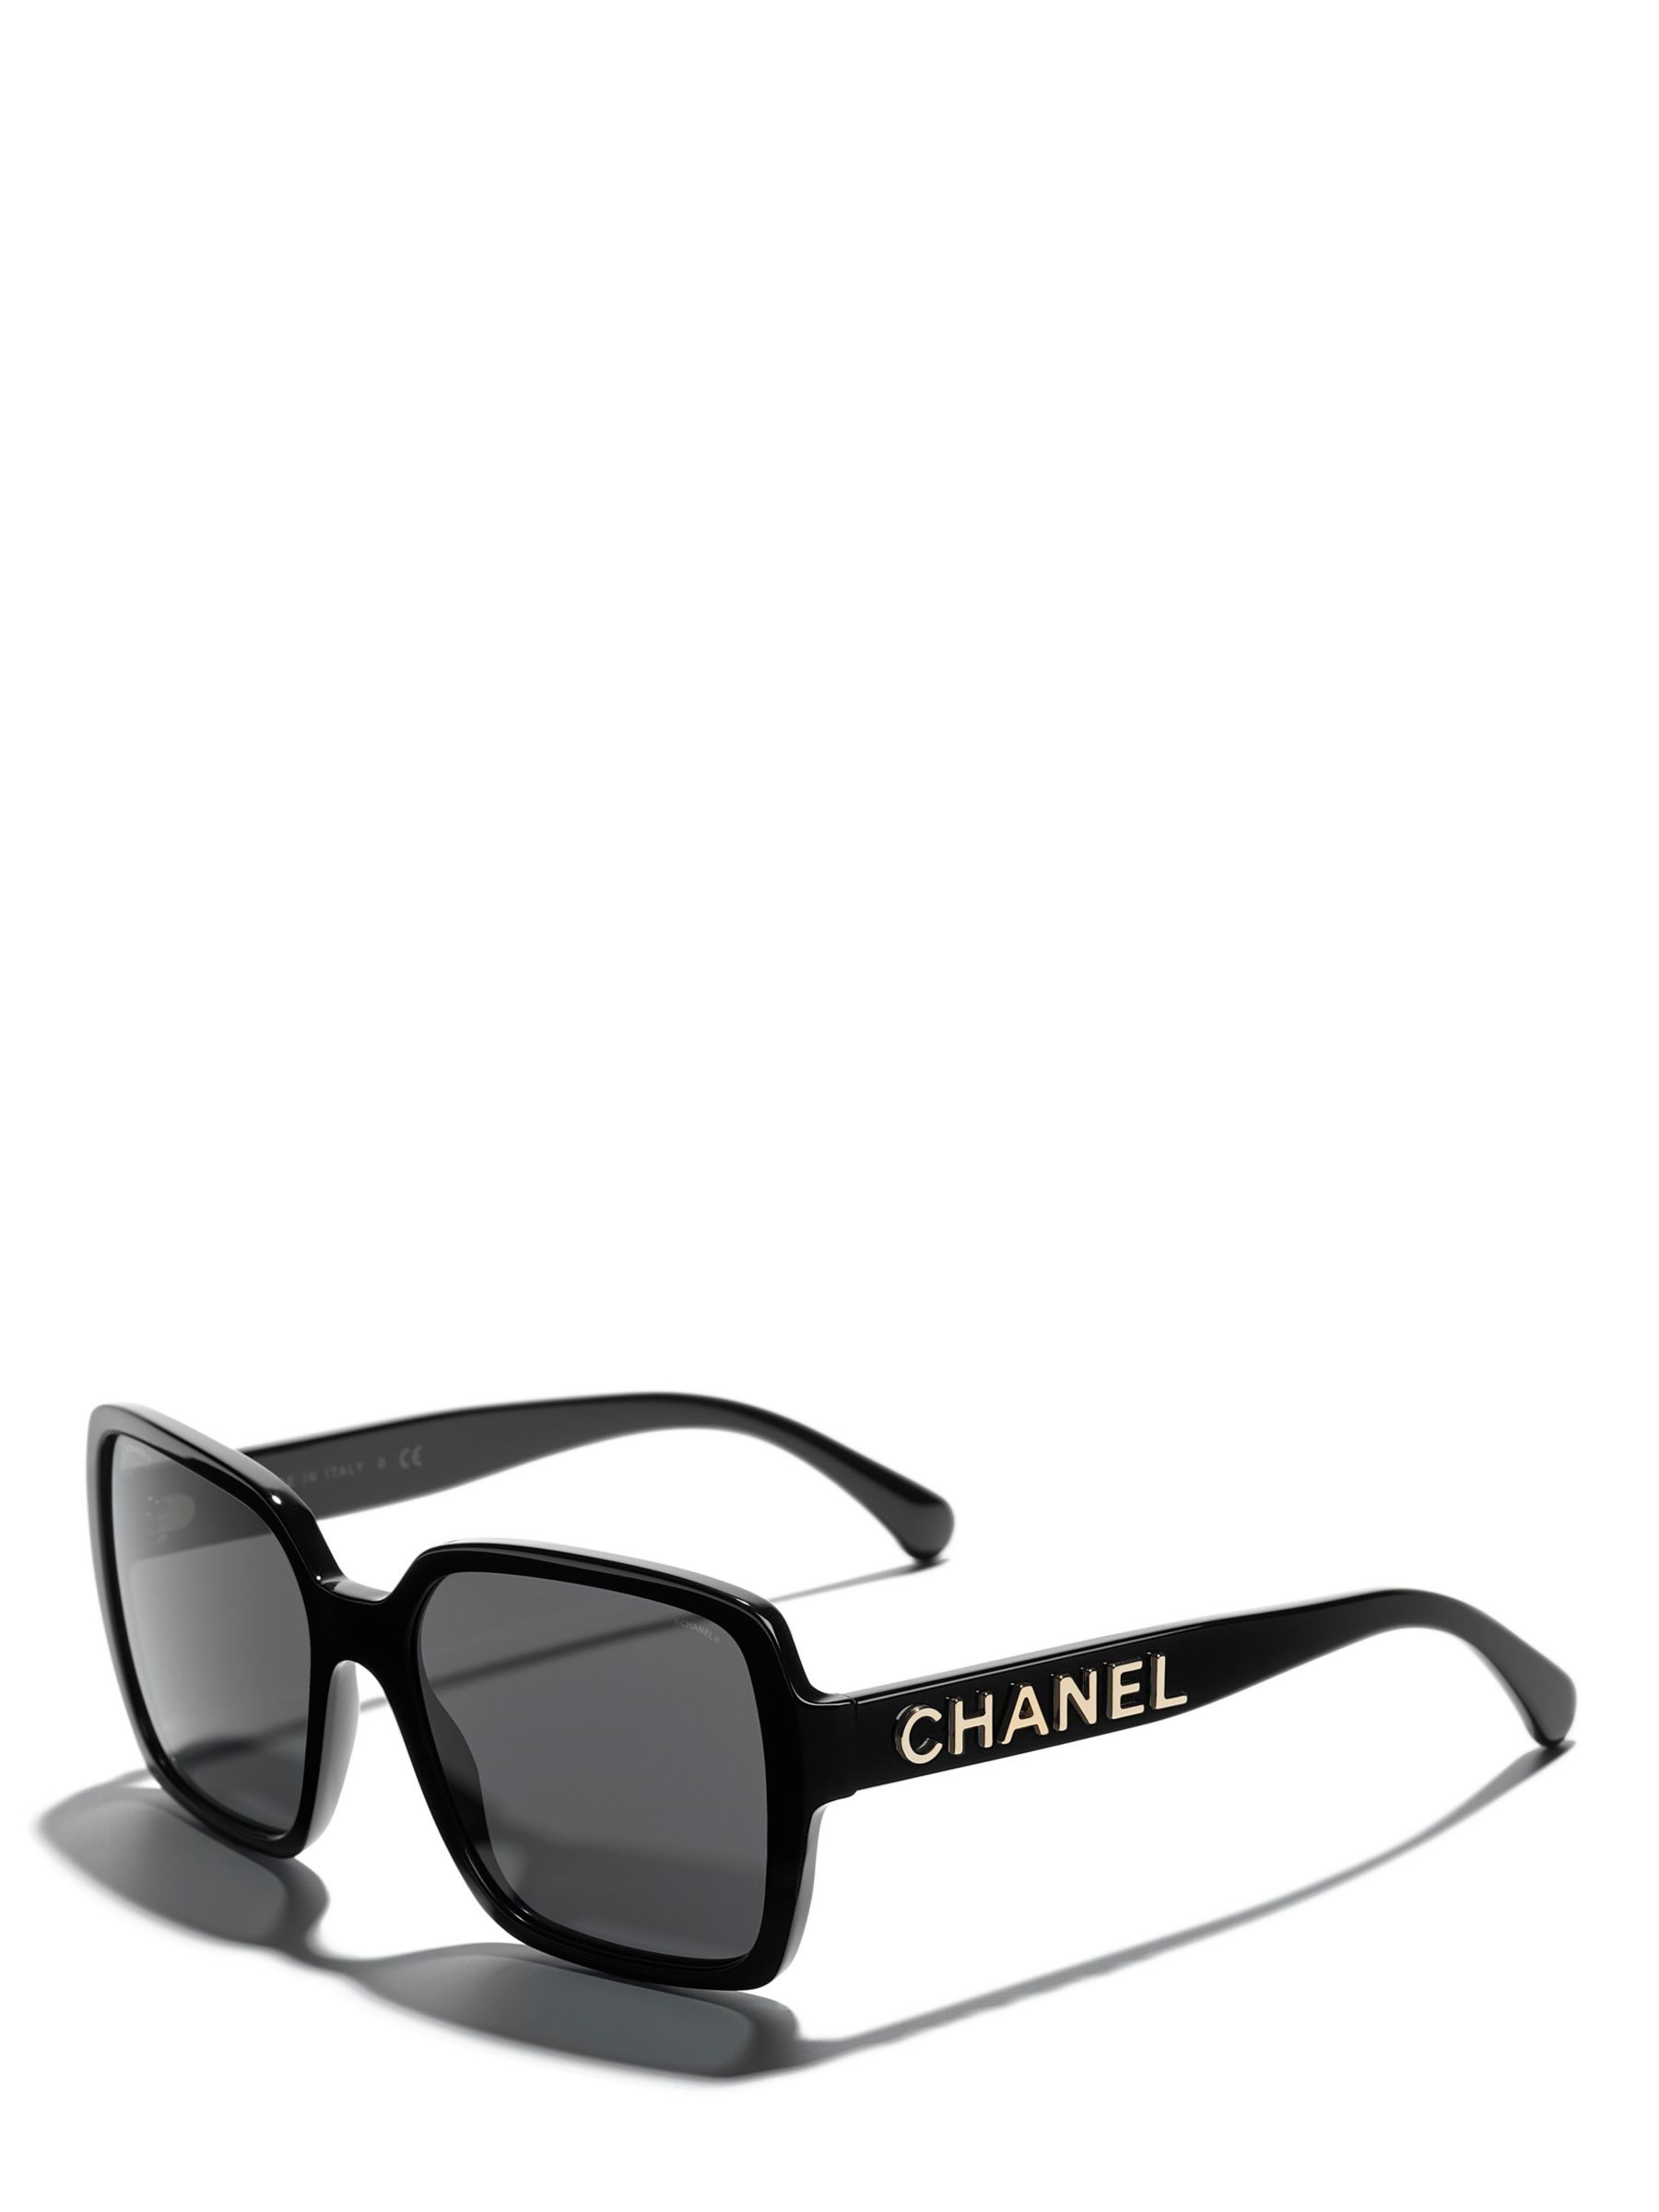 CHANEL Pillow Sunglasses CH5408, Black at John Lewis & Partners